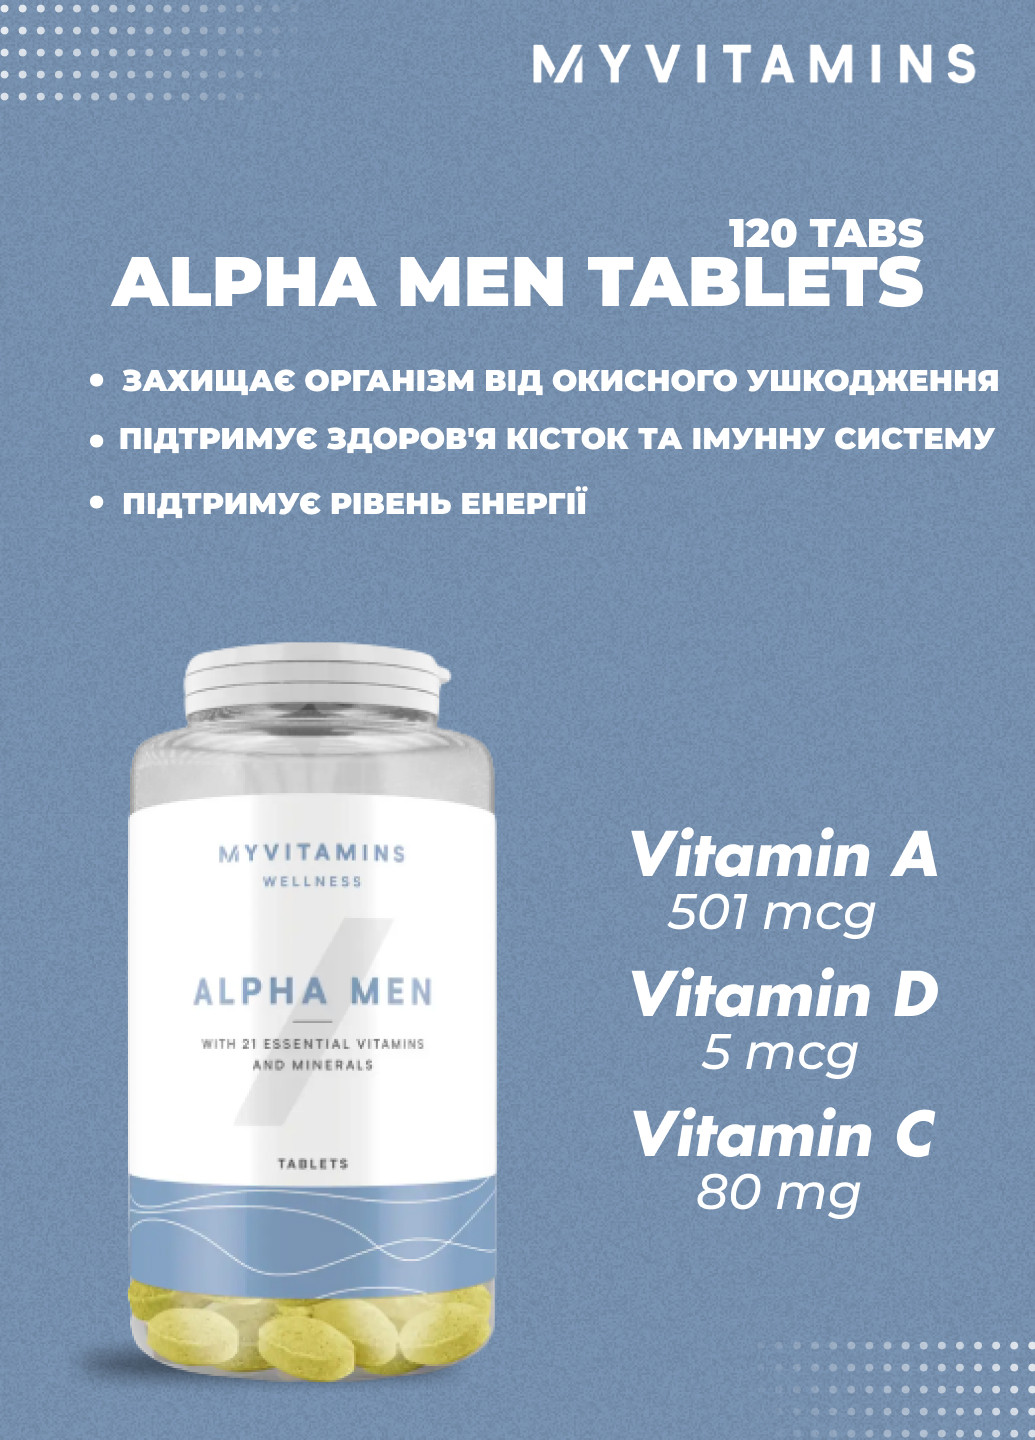 Мультивитаминный комплекс для мужчин Alpha Men Super Multi Vitamin - 120tabs My vitamins Myvitamins (251787738)